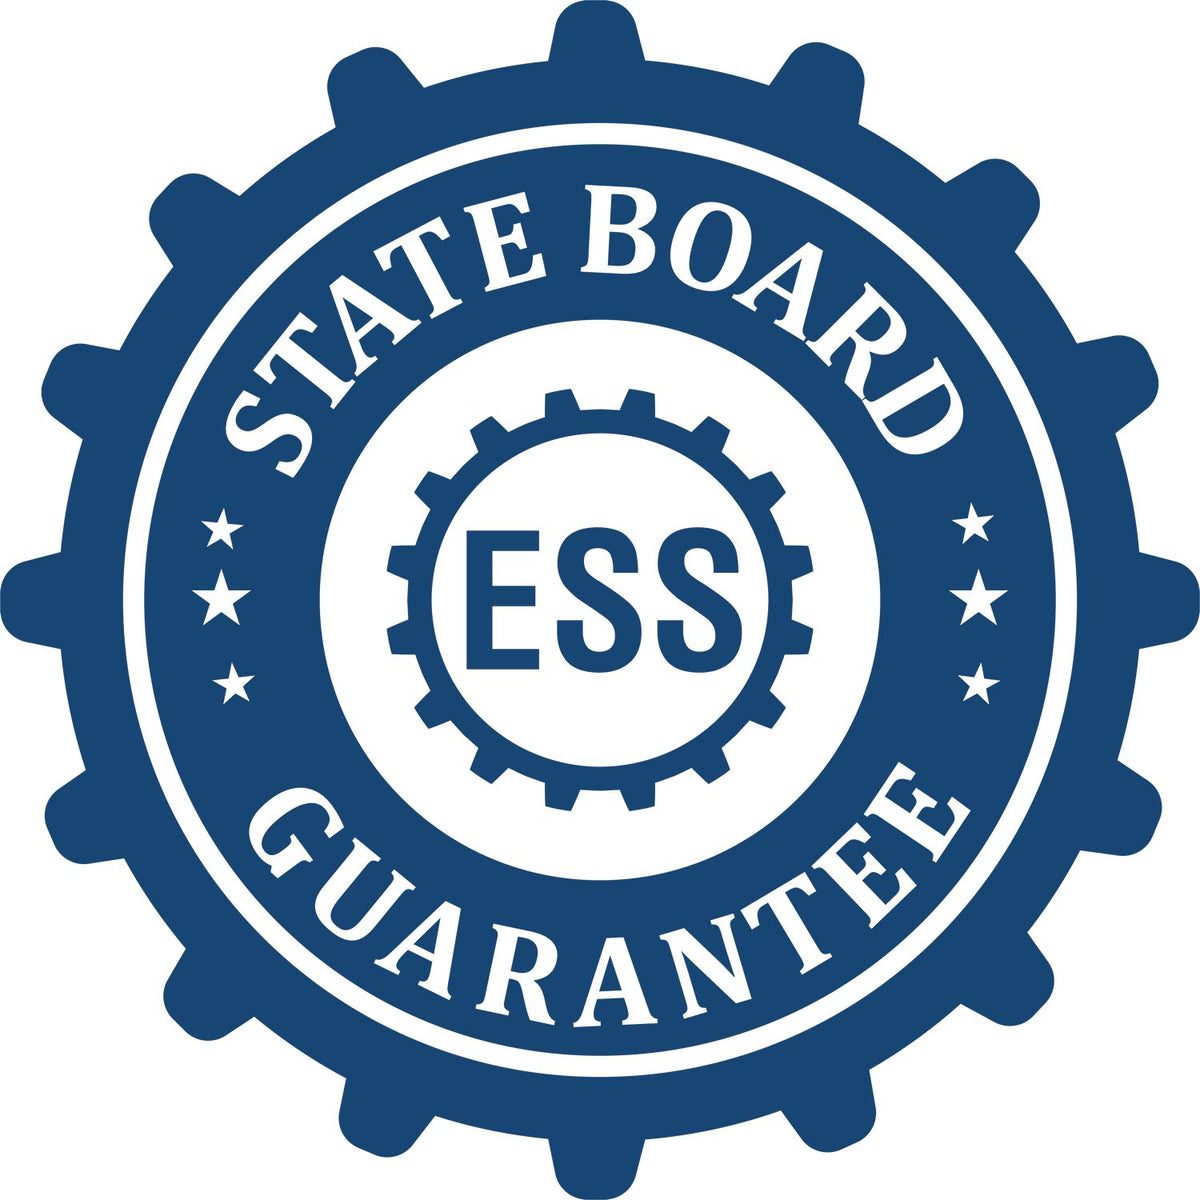 An emblem in a gear shape illustrating a state board guarantee for the Hybrid Washington Land Surveyor Seal